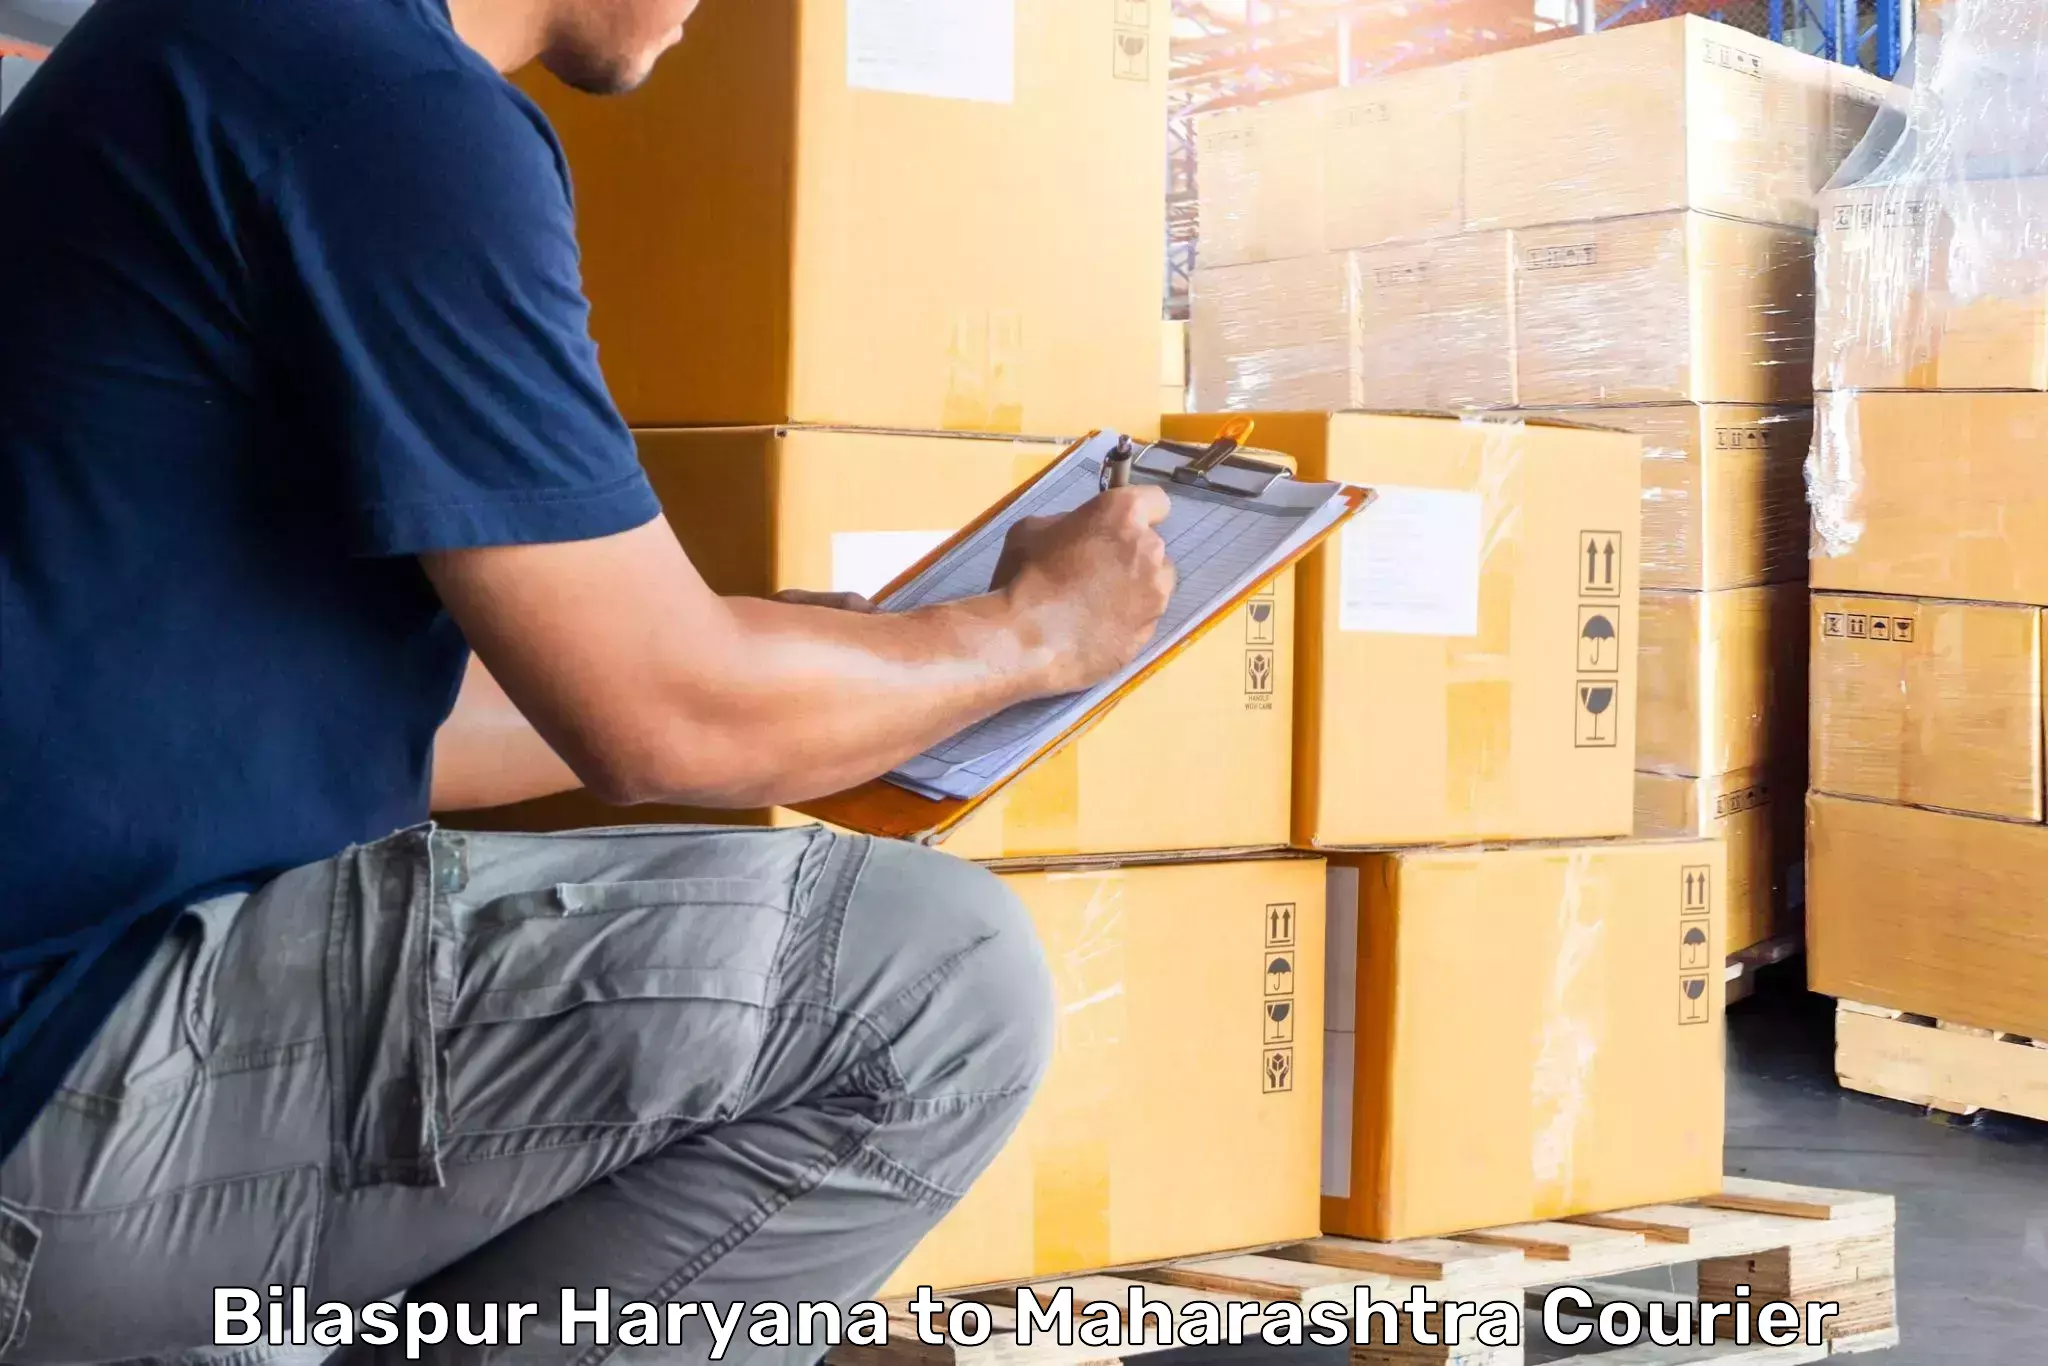 Luggage shipment specialists Bilaspur Haryana to Wardha